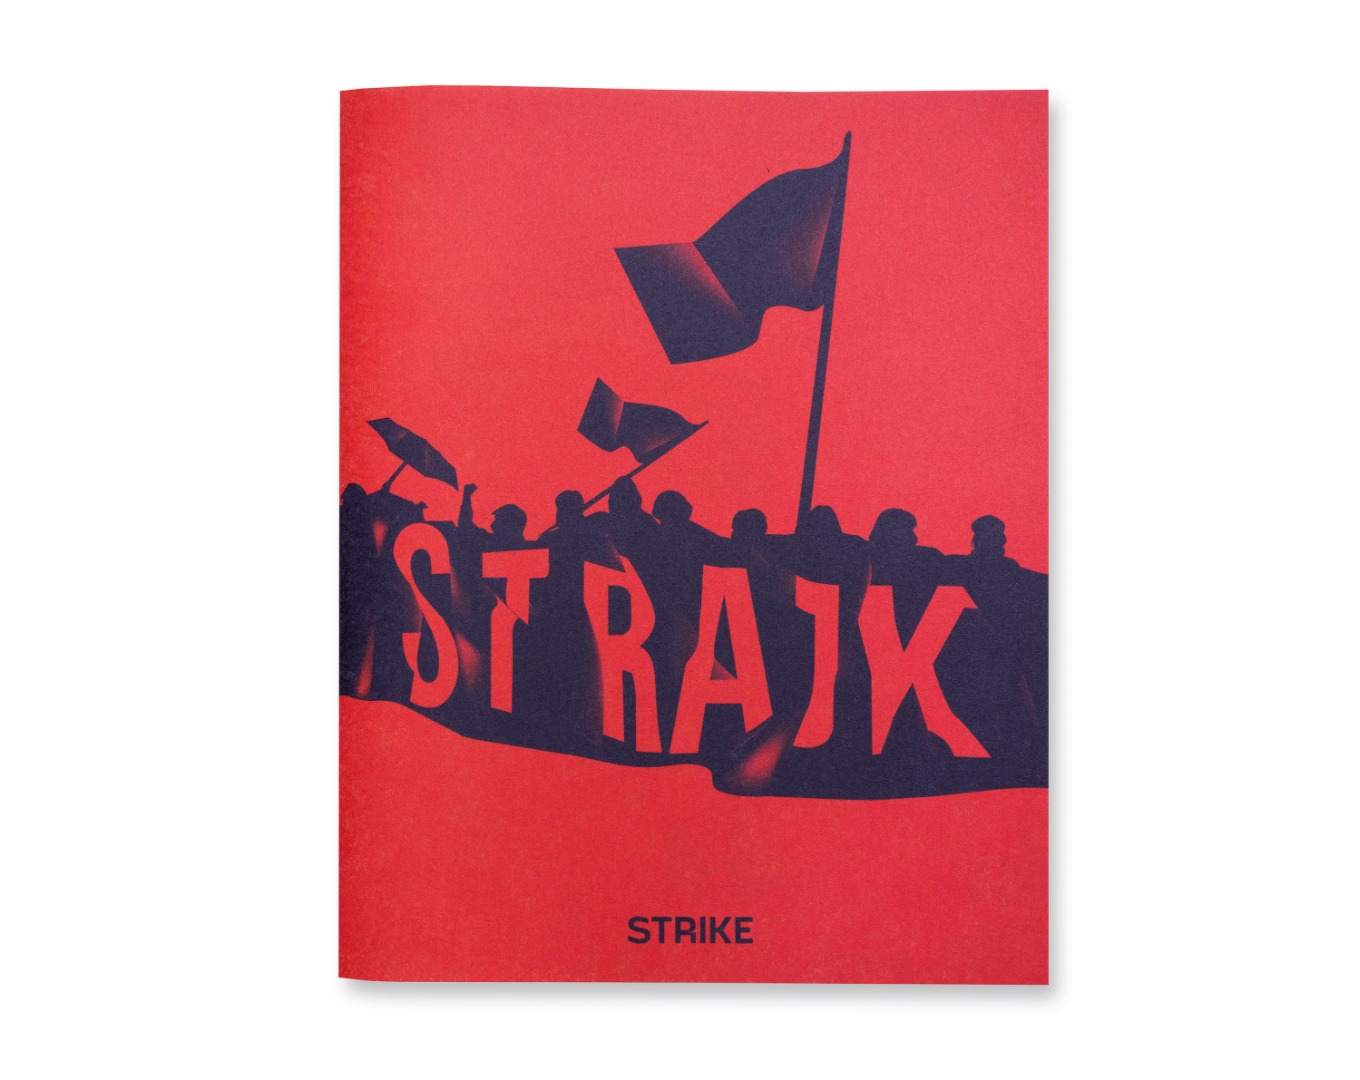 okładka książki strajk